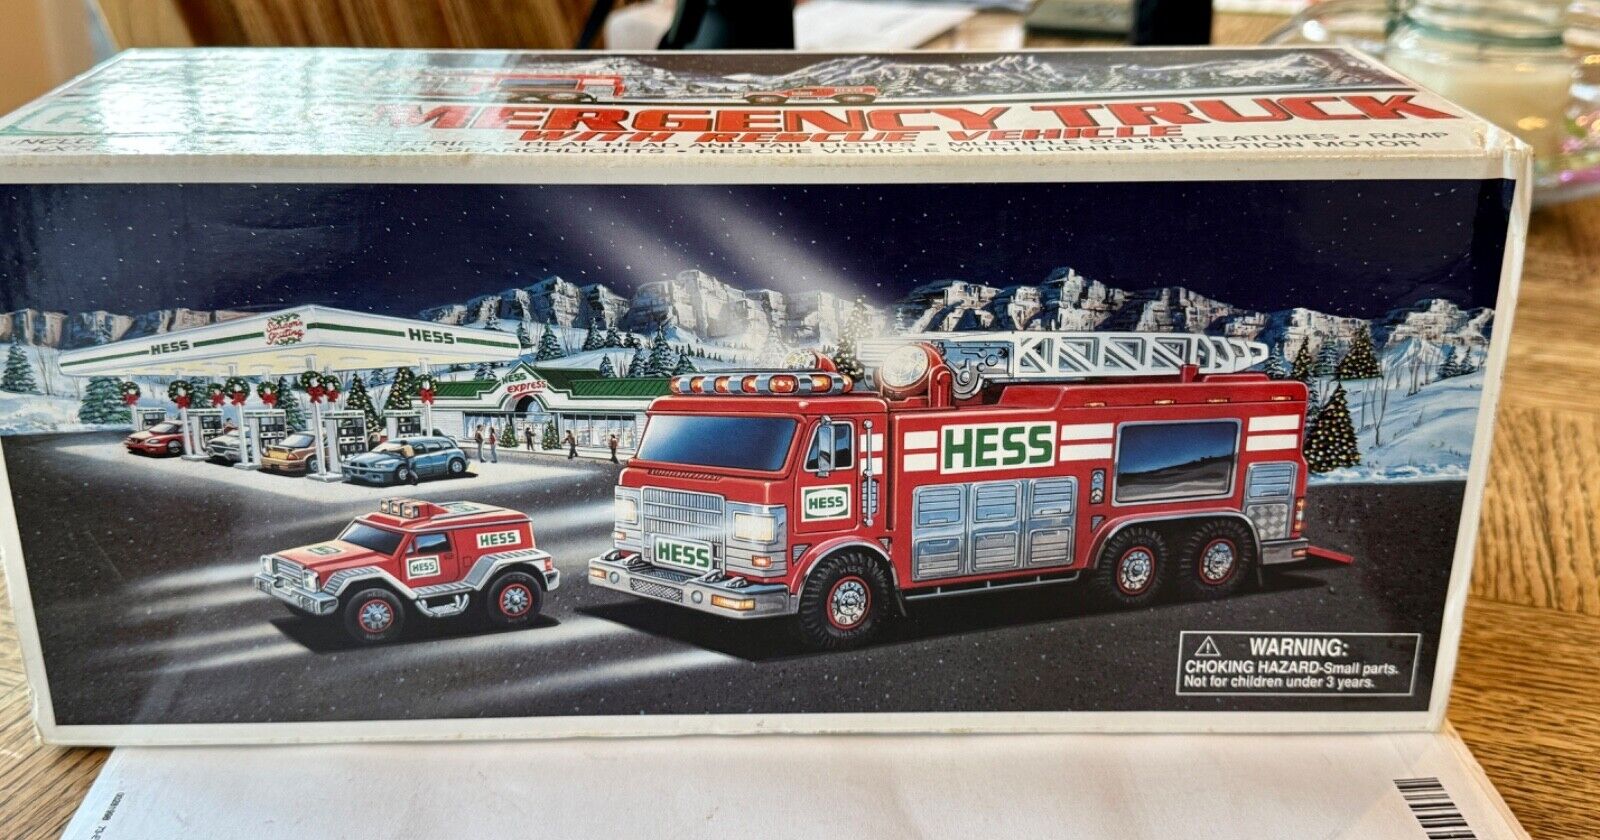 2005 Hess Emergency Truck & Rescue Vehicle - New in Original Box - 